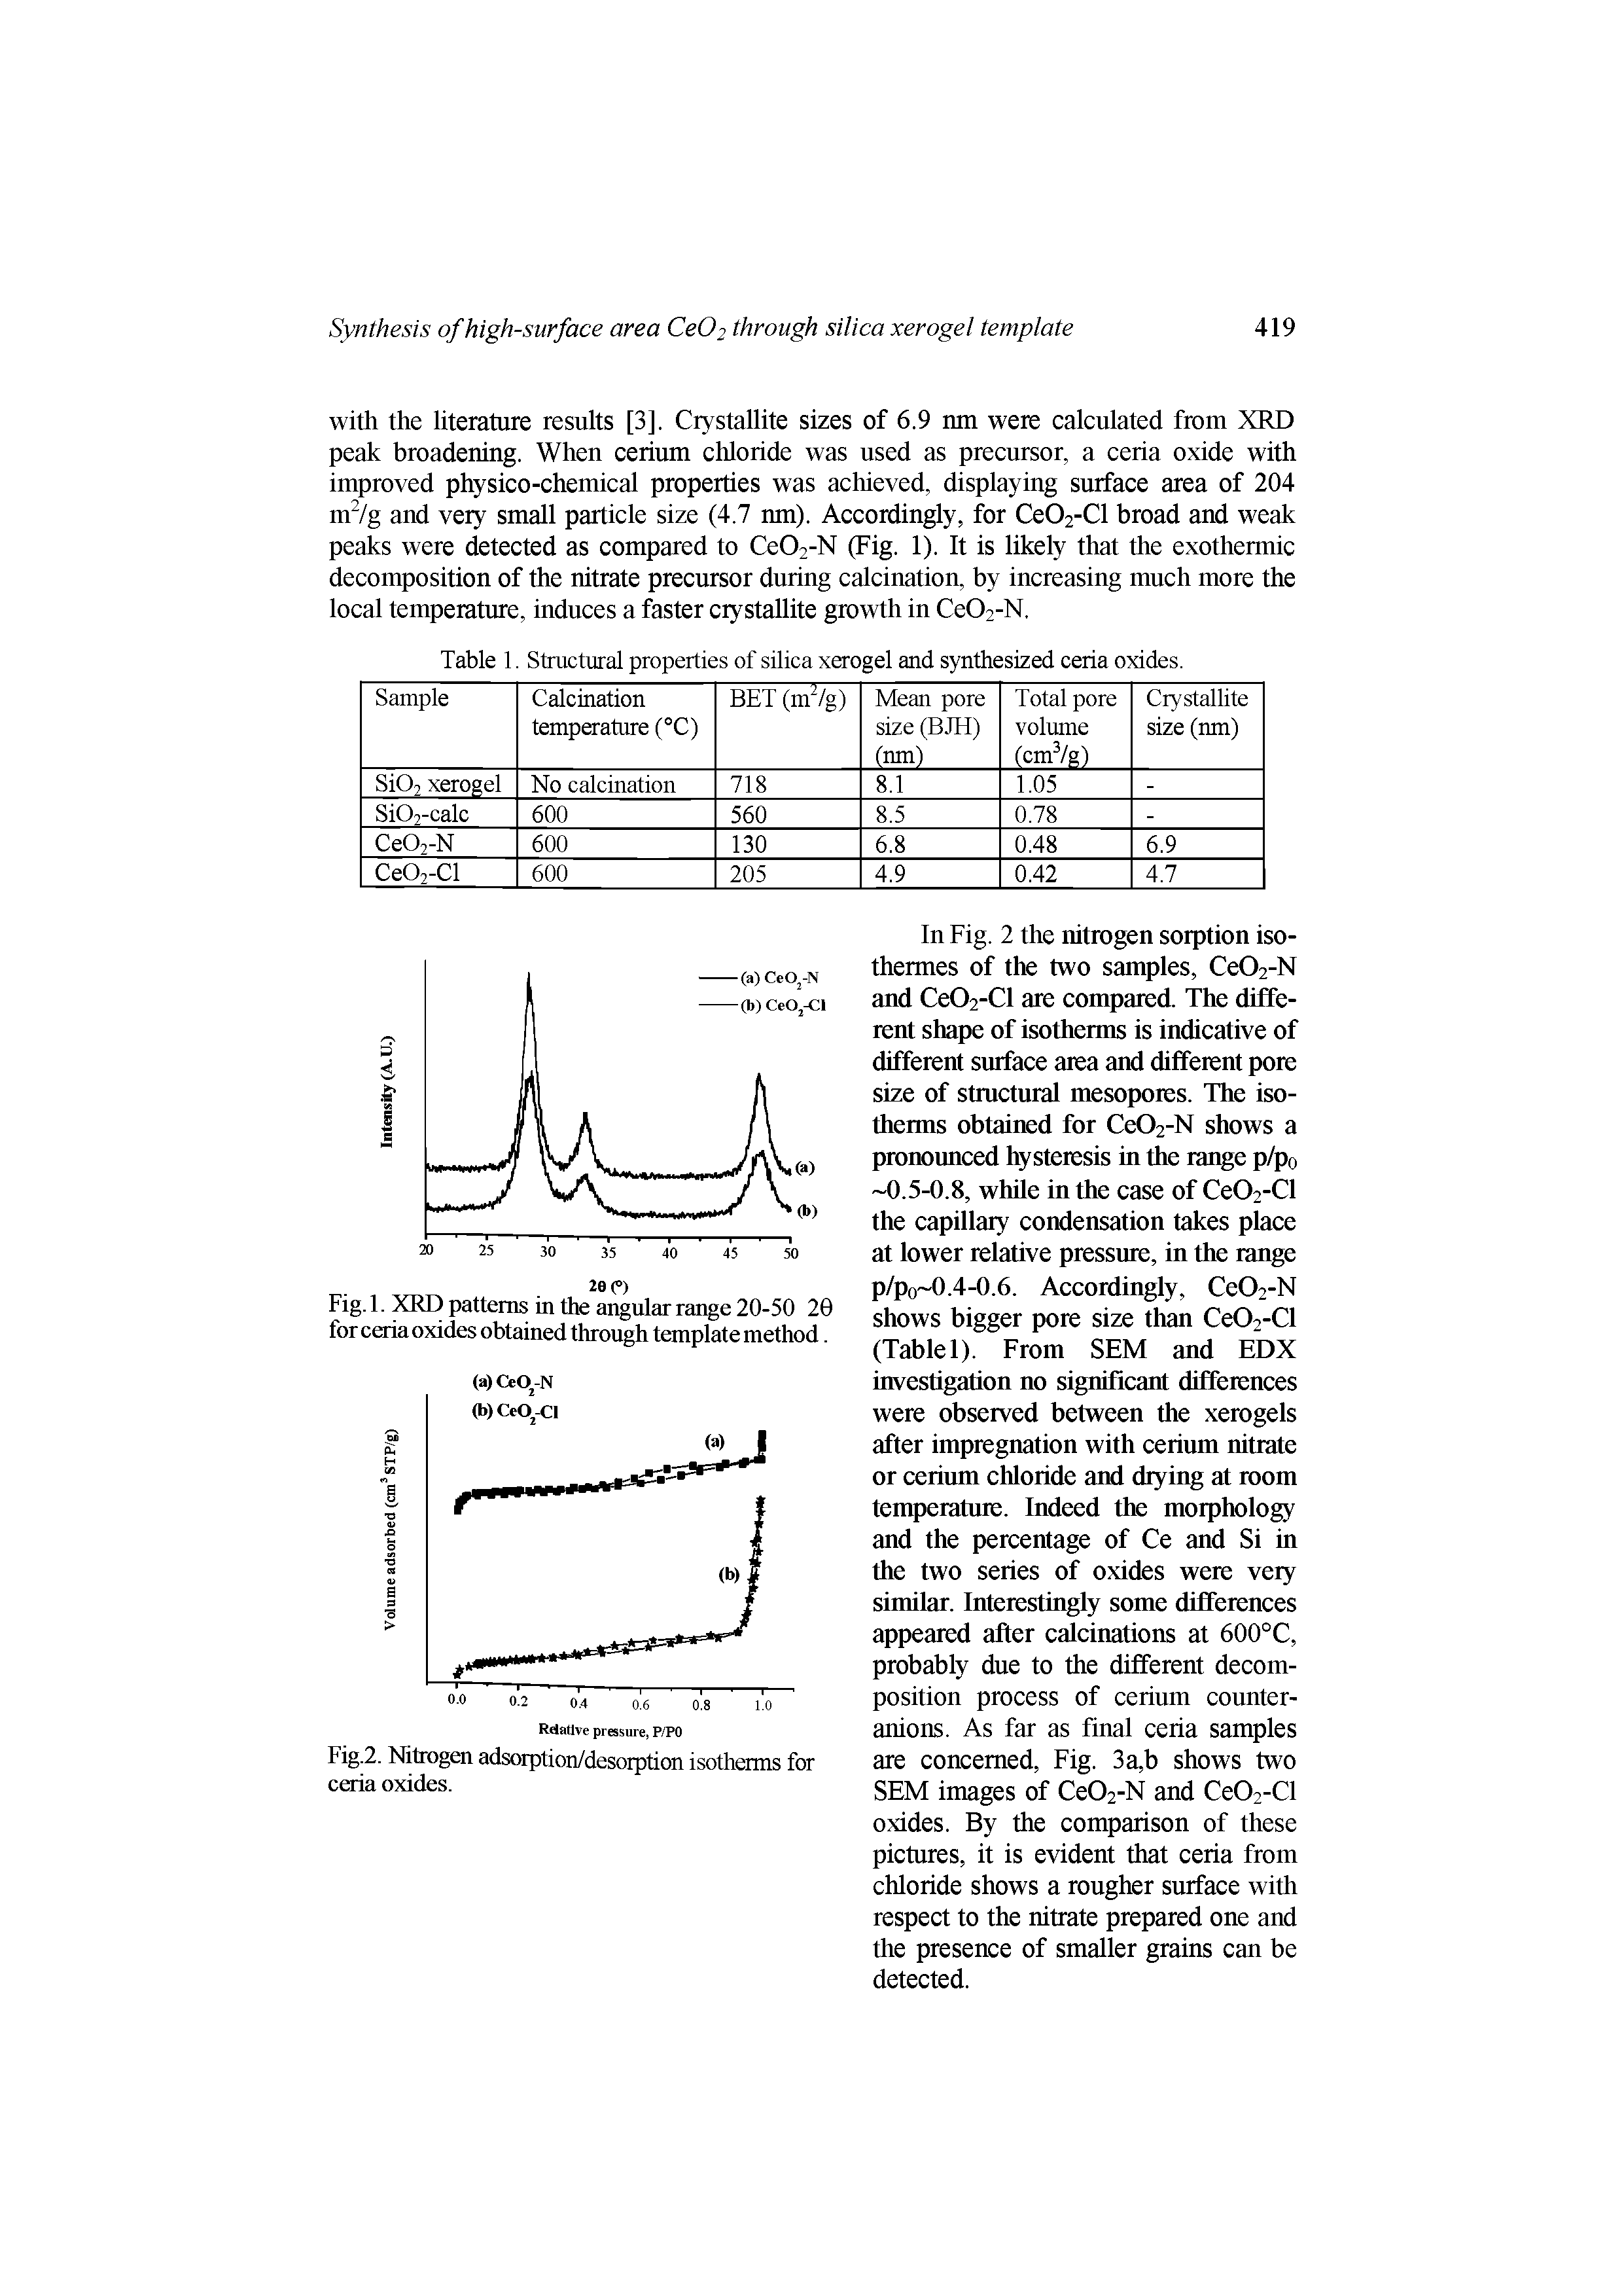 Fig.2. Nitrogen adsorption/desorption isotherms for ceria oxides.